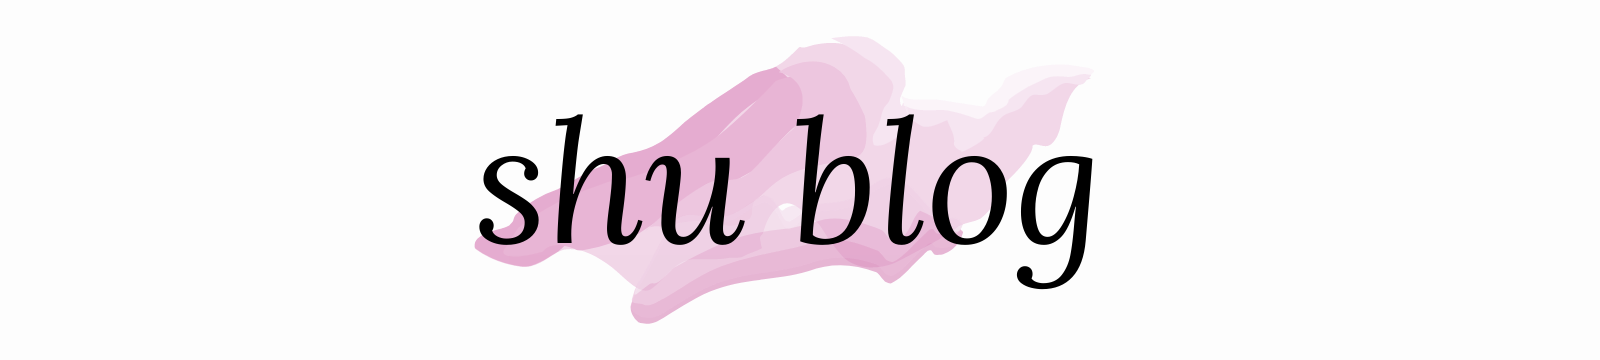 shu blog「将来の不安」を「個人の（書く、文章）力」で解決する人生ブログ。